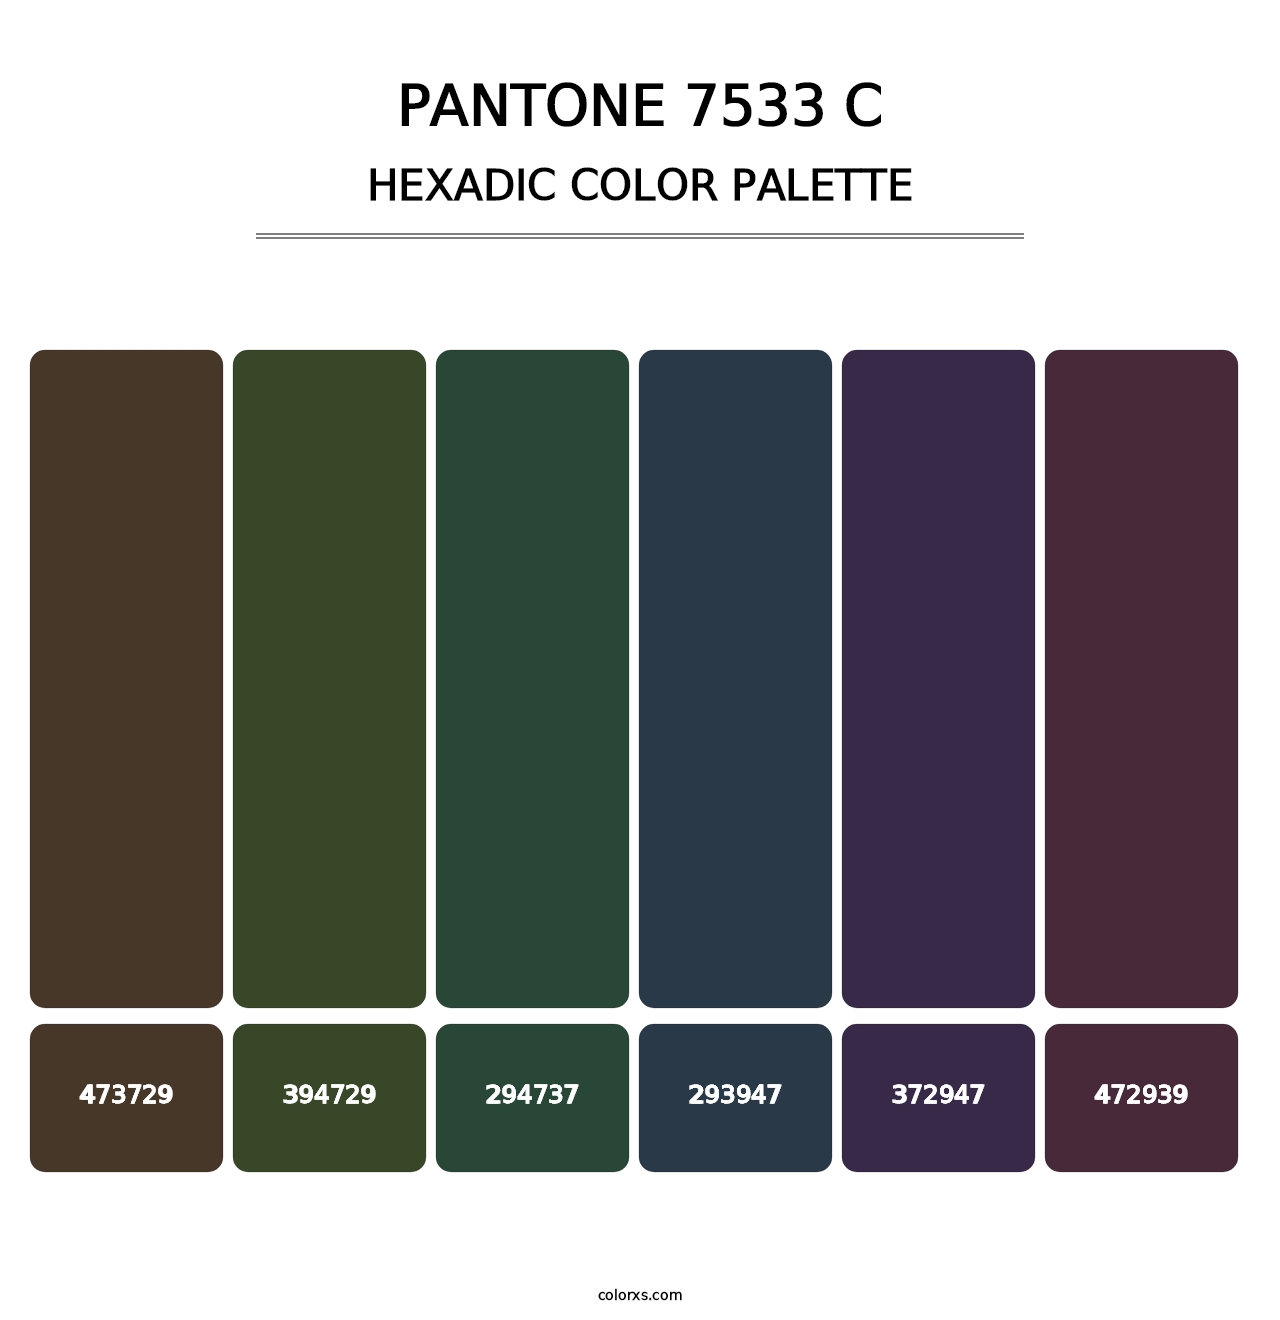 PANTONE 7533 C - Hexadic Color Palette